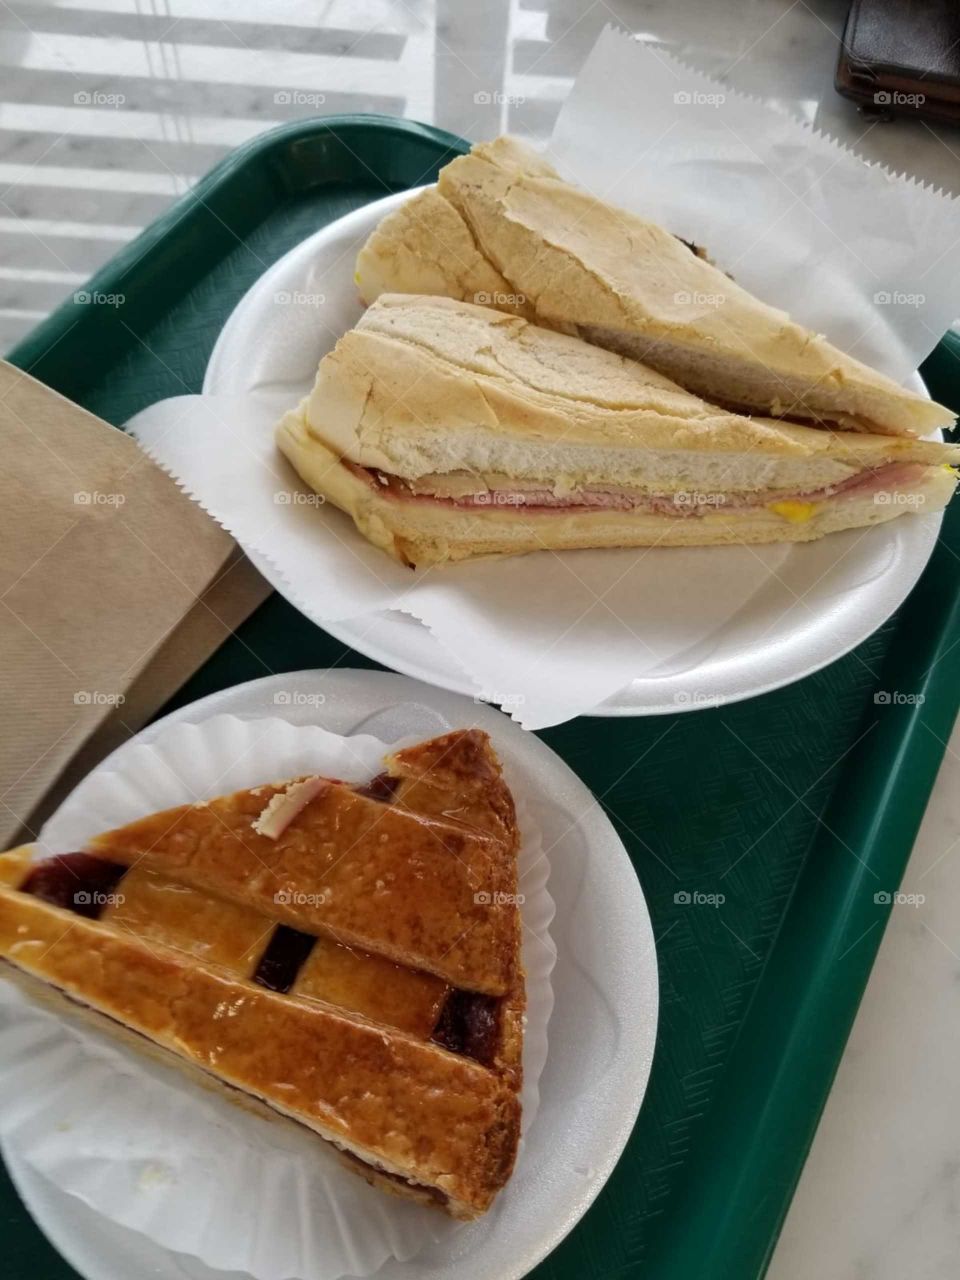 Guava Pie and Cuban sandwich 